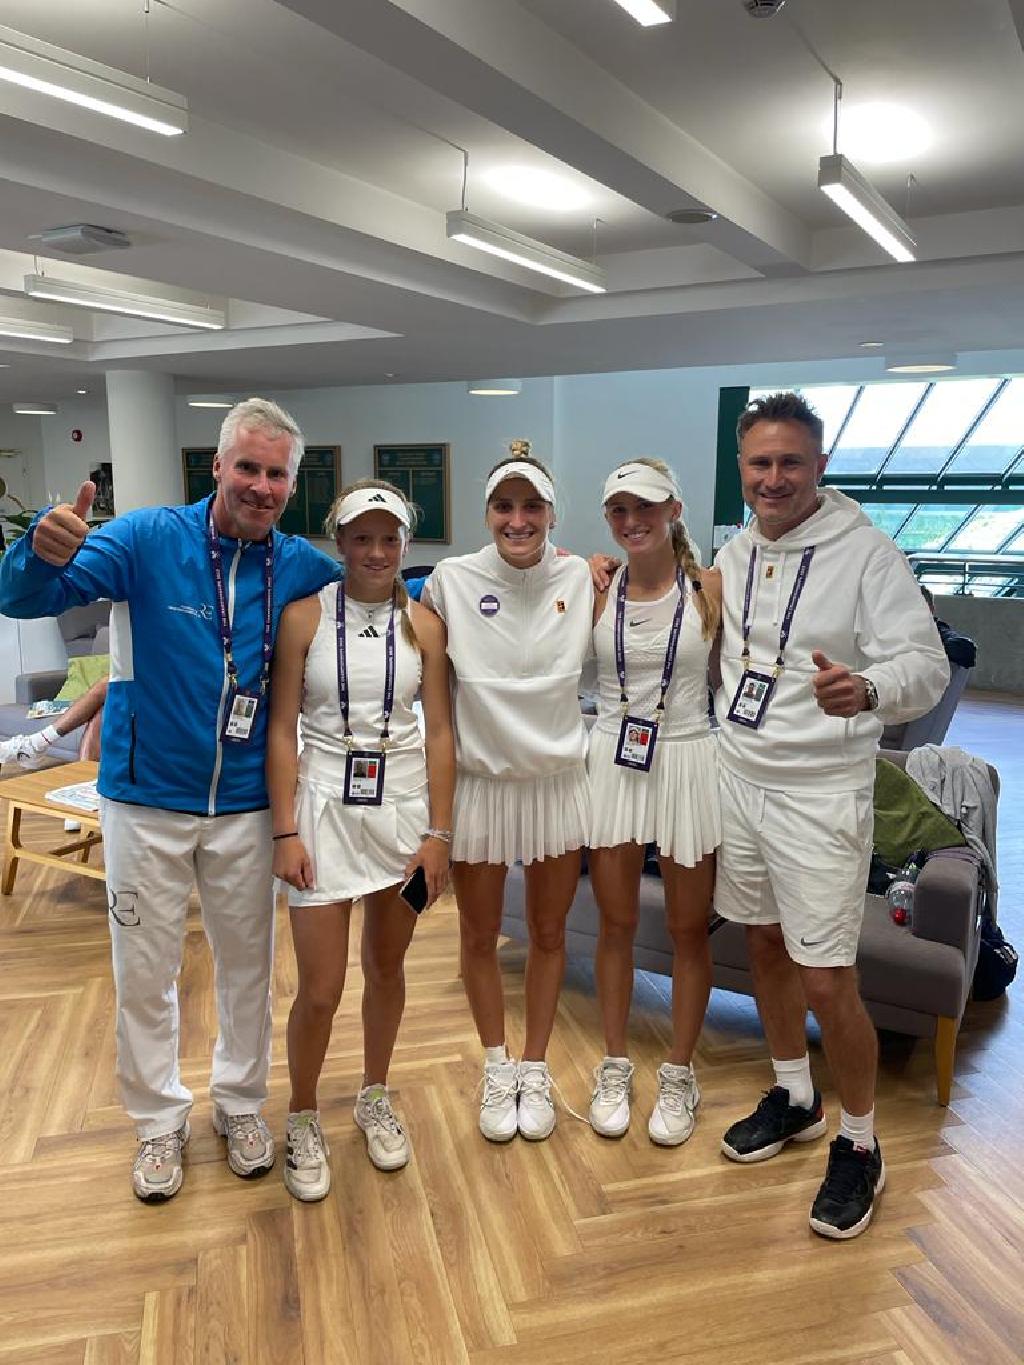 Laura Samsonová a Alena Kovačková, tenis, Wimbledon 2023, juniorky, čtyřhra